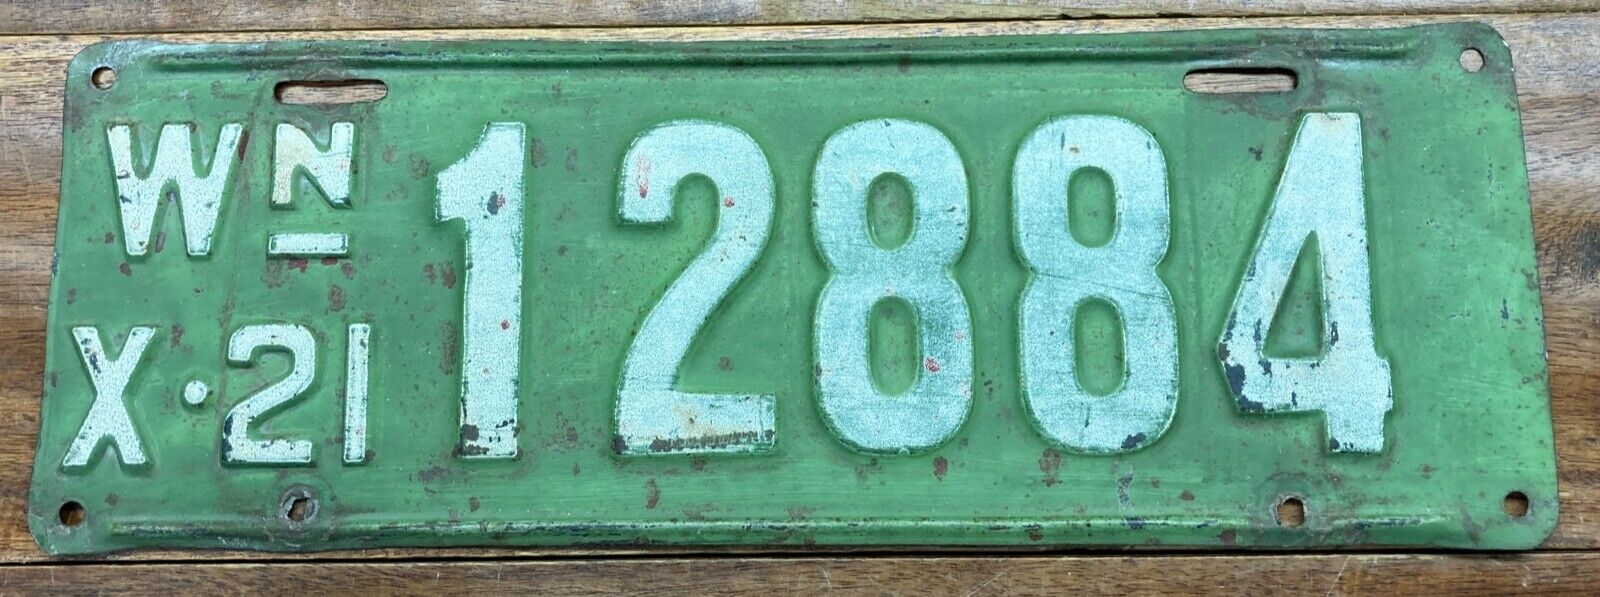 FAIRLY DECENT ORIGINAL 1921 WASHINGTON PASSENGER CAR LICENSE PLATE, WN 12884